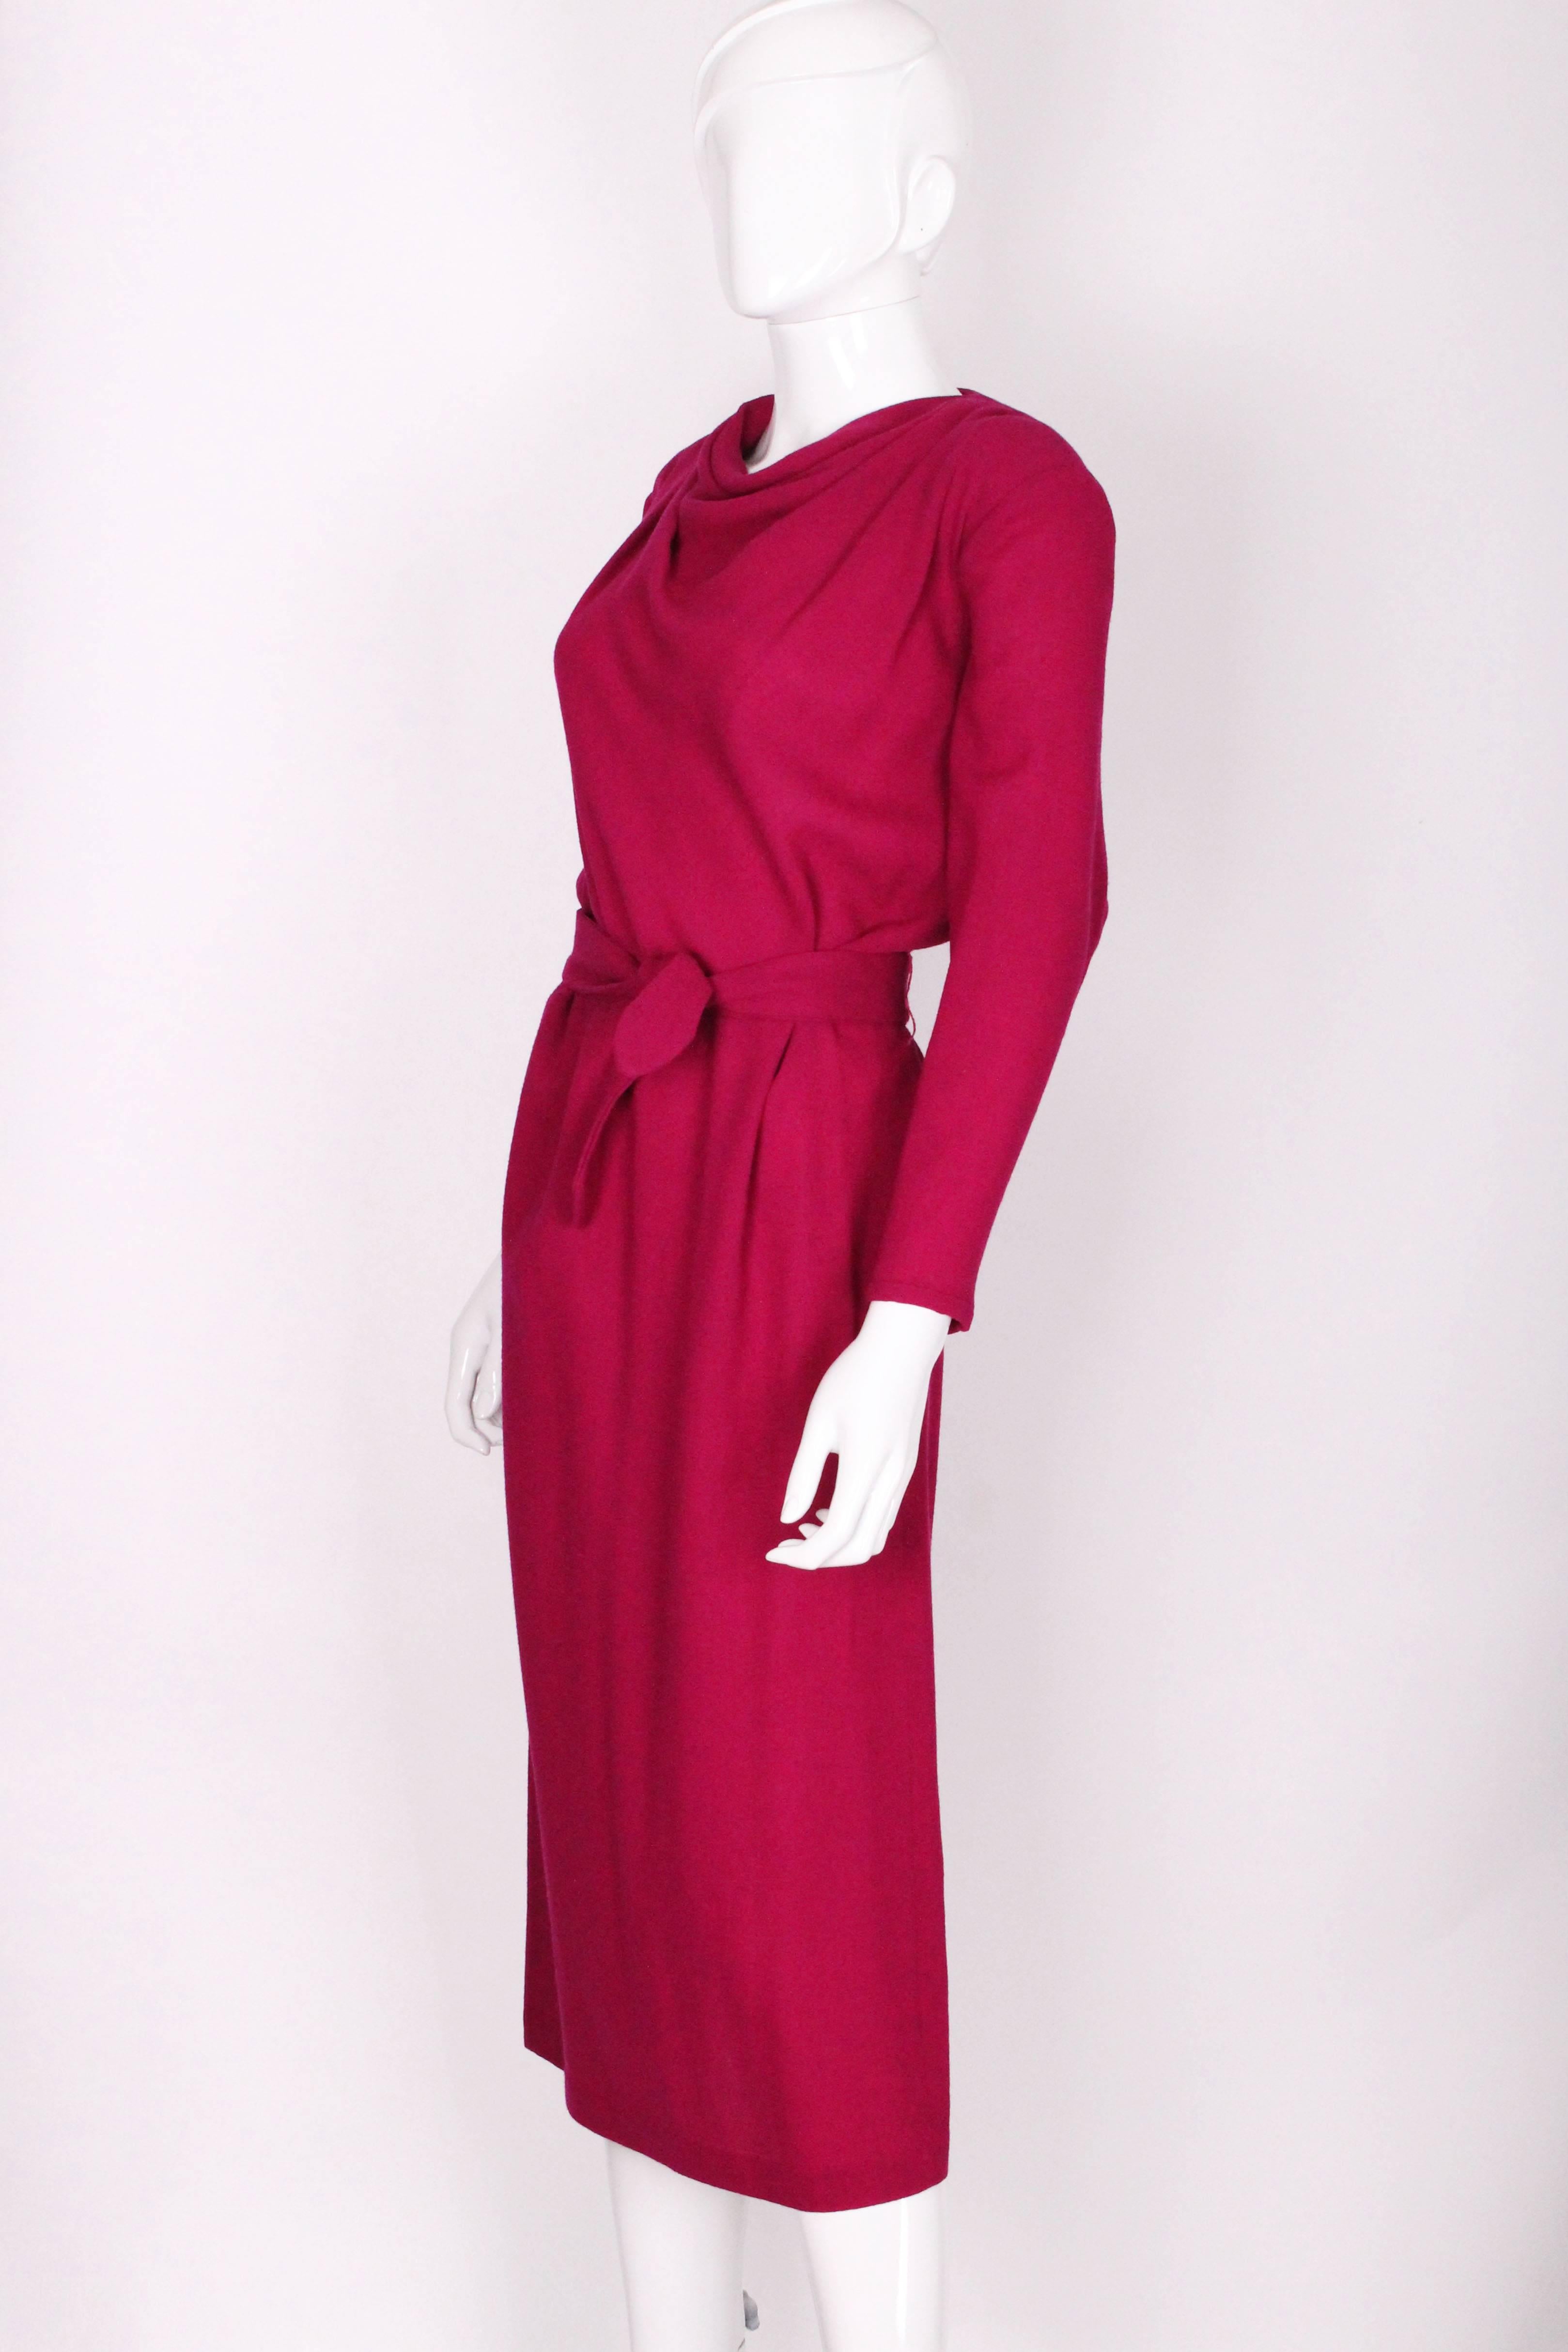 Red 1980's Biba Wool Crepe Dress.